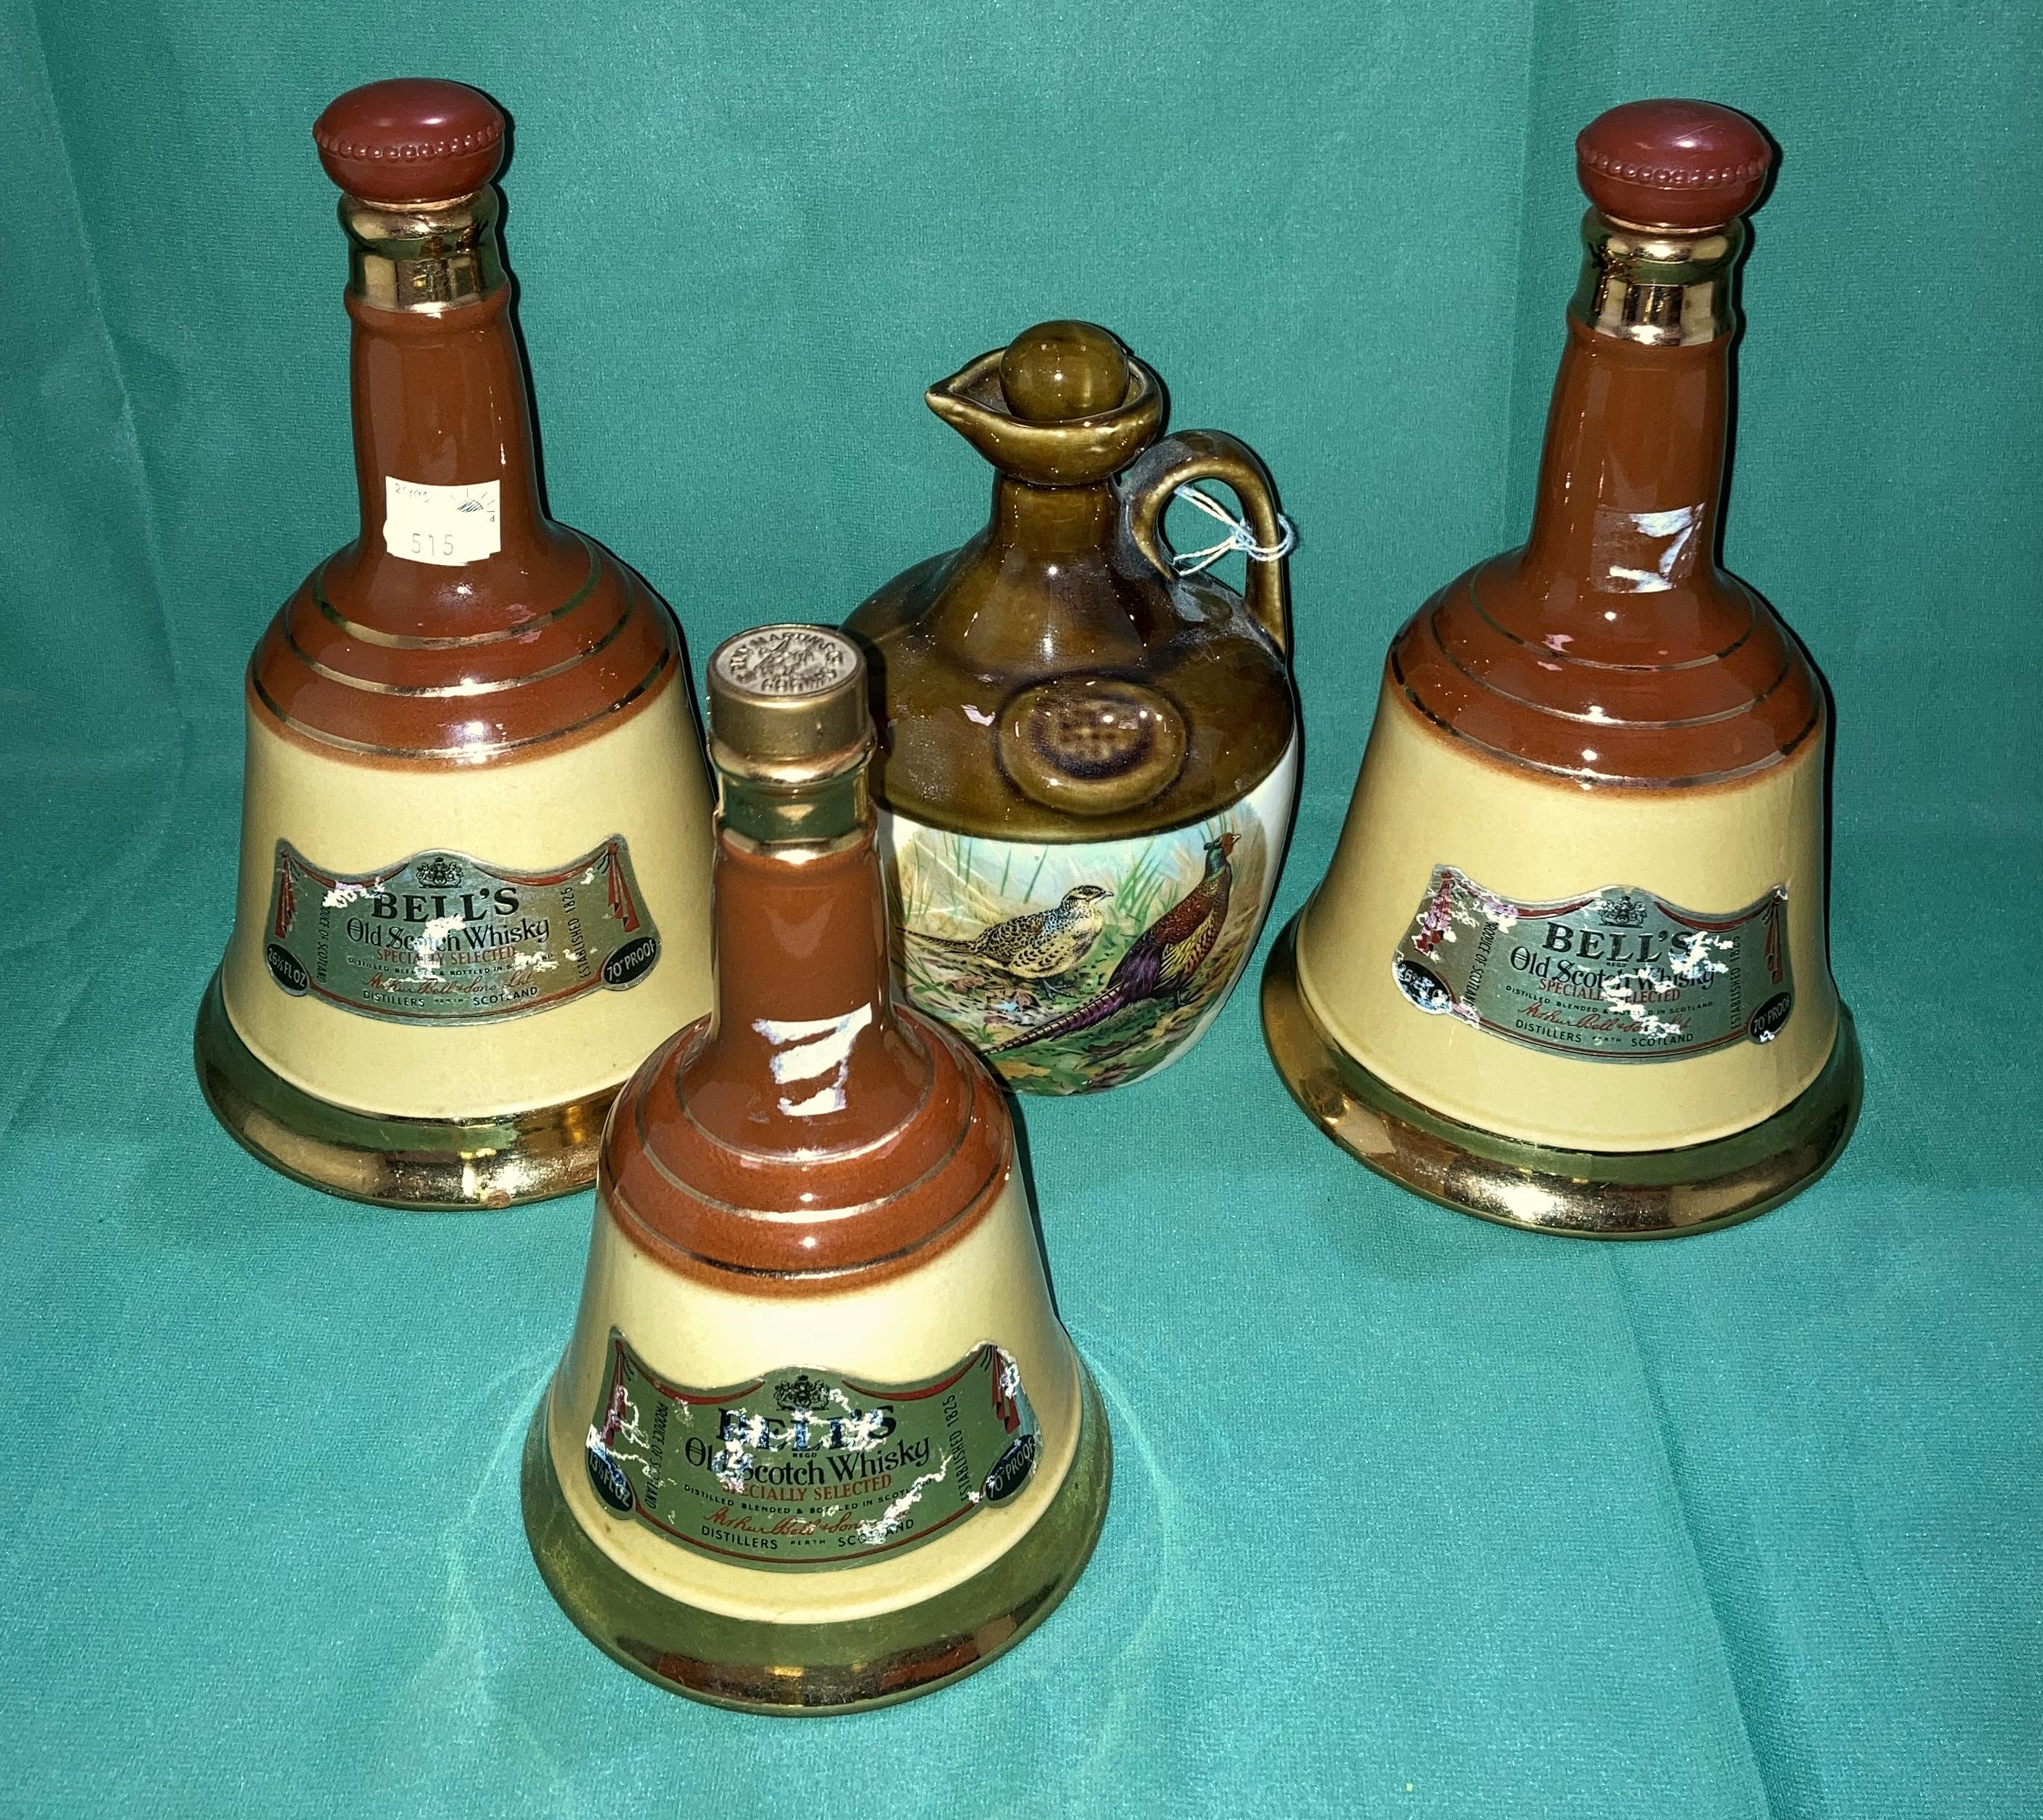 Pair of Bells ceramic wade 26 2/3floz bottles and 13 1/3floz bottles and a Montrose pheasant